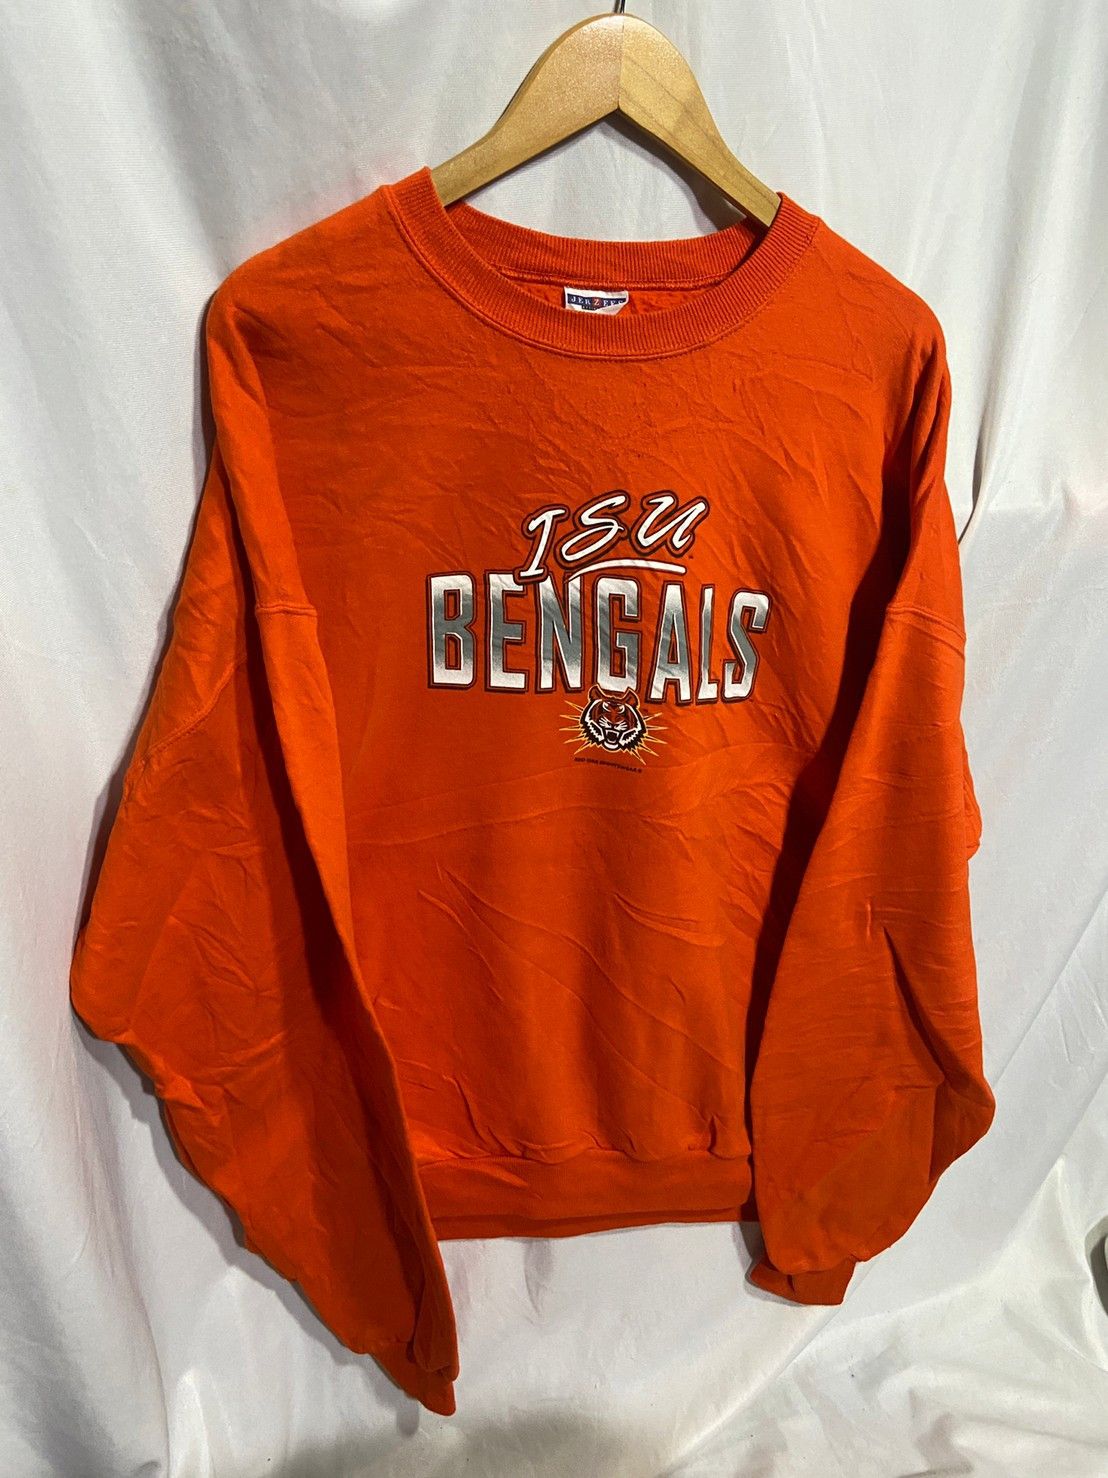 Vintage Vintage Idaho State Bengals Isu Sweatshirt 90s Grailed 0752